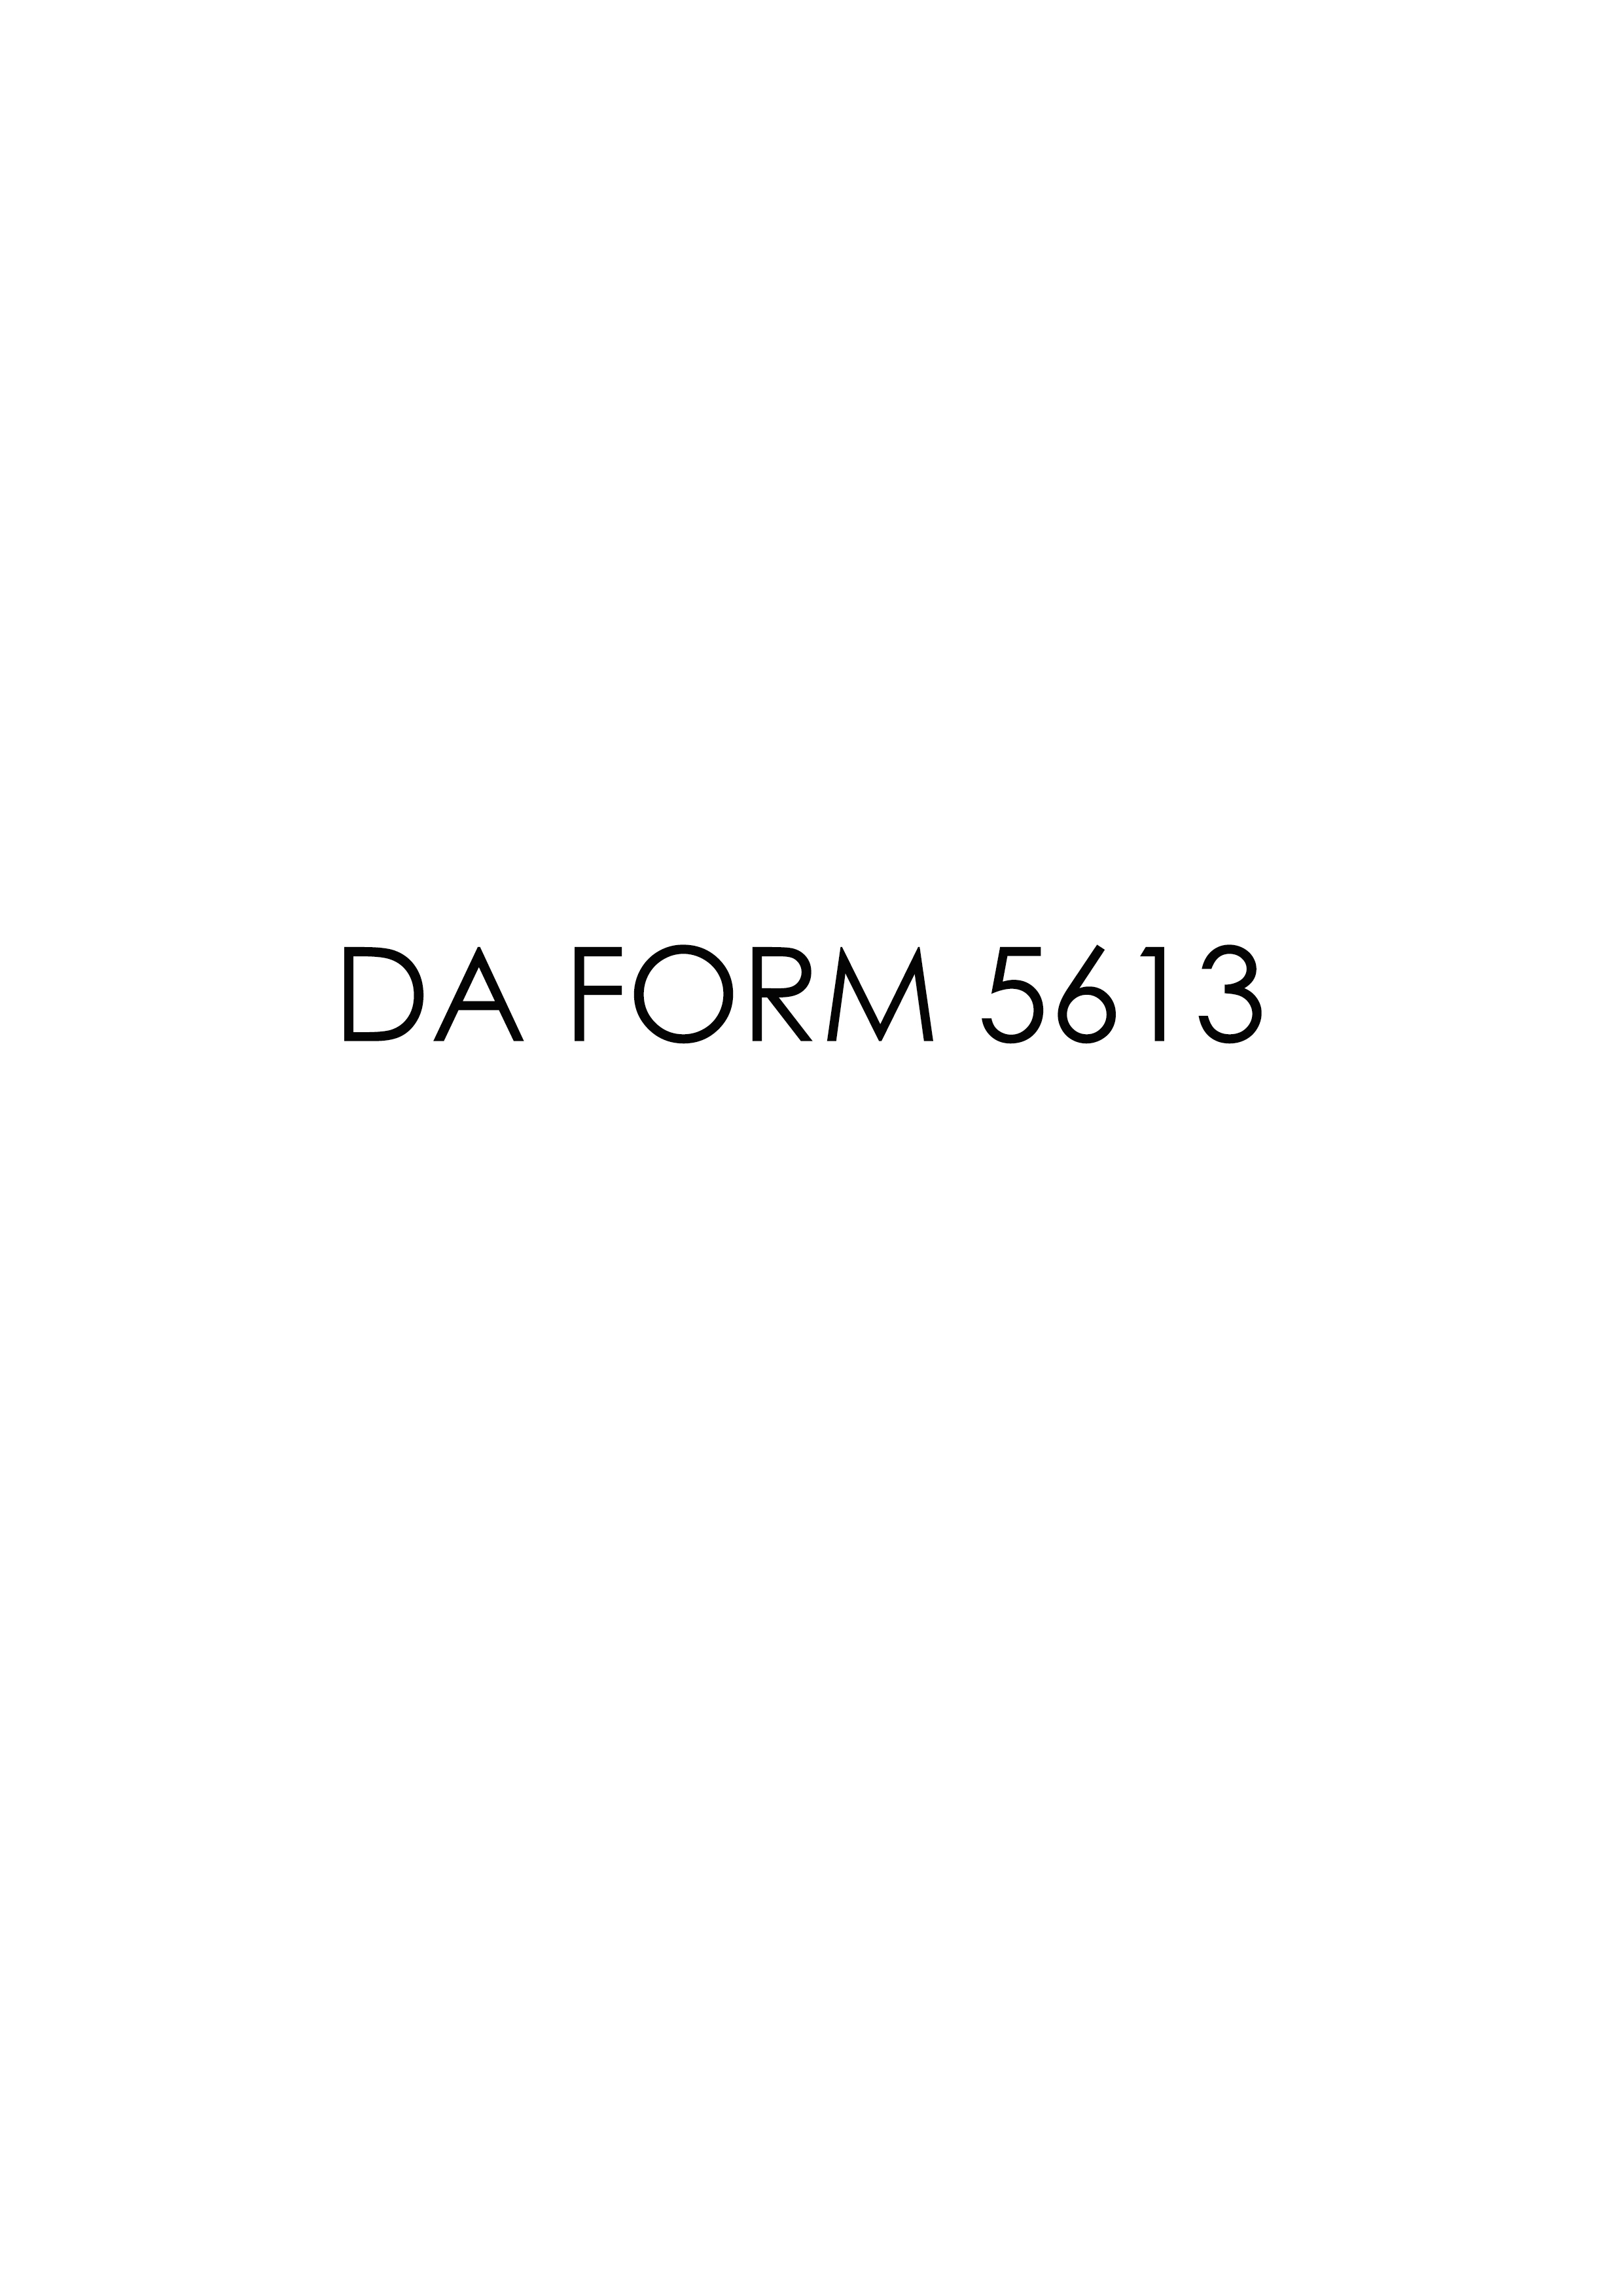 da Form 5613 fillable